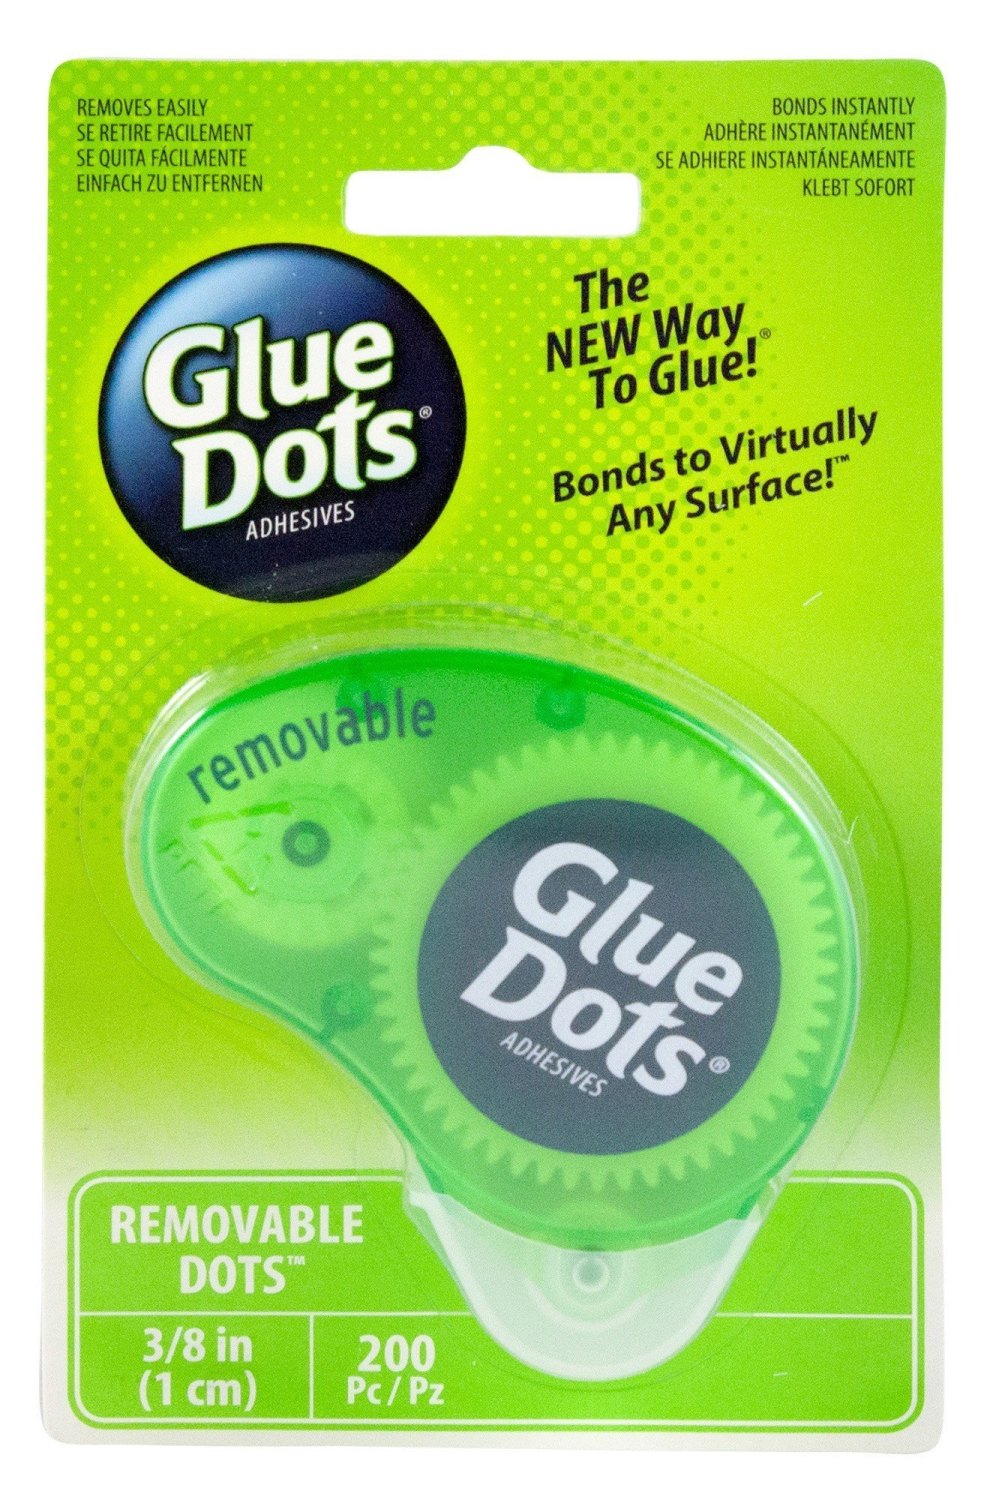 Glue Dots 'Removable Dots' 